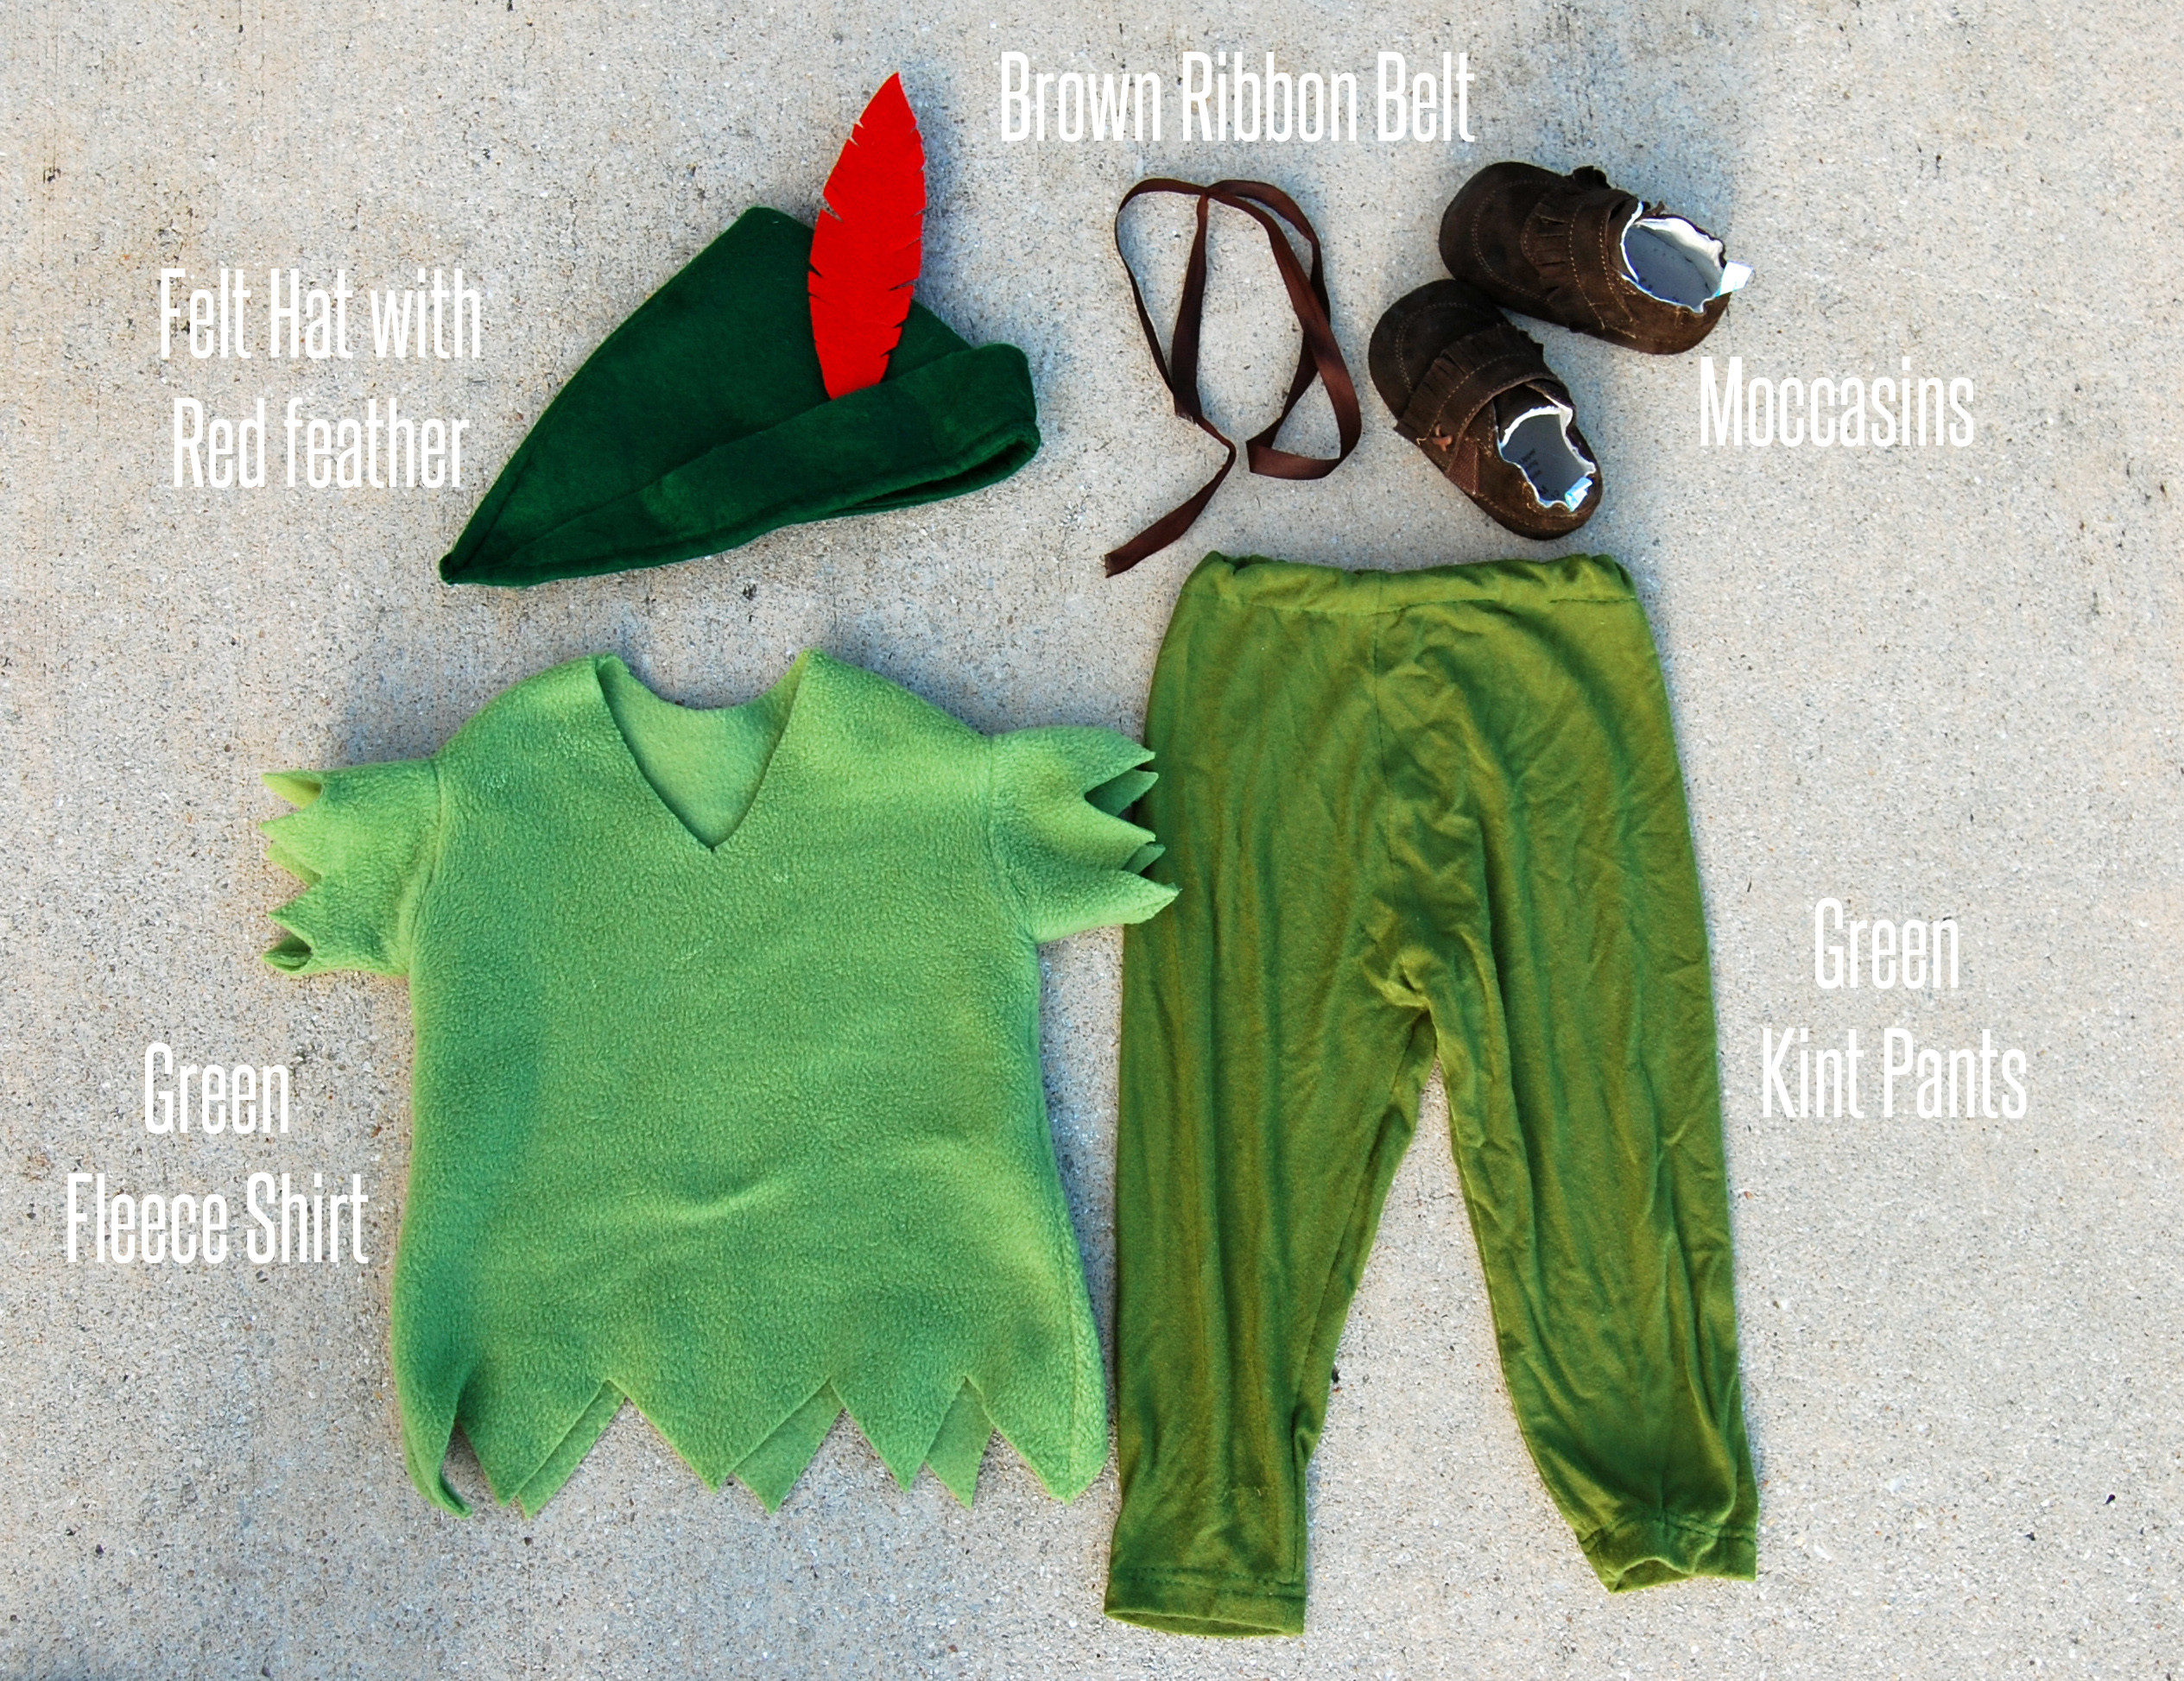 Best ideas about DIY Toddler Peter Pan Costume
. Save or Pin DIY Peter Pan Costume Now.